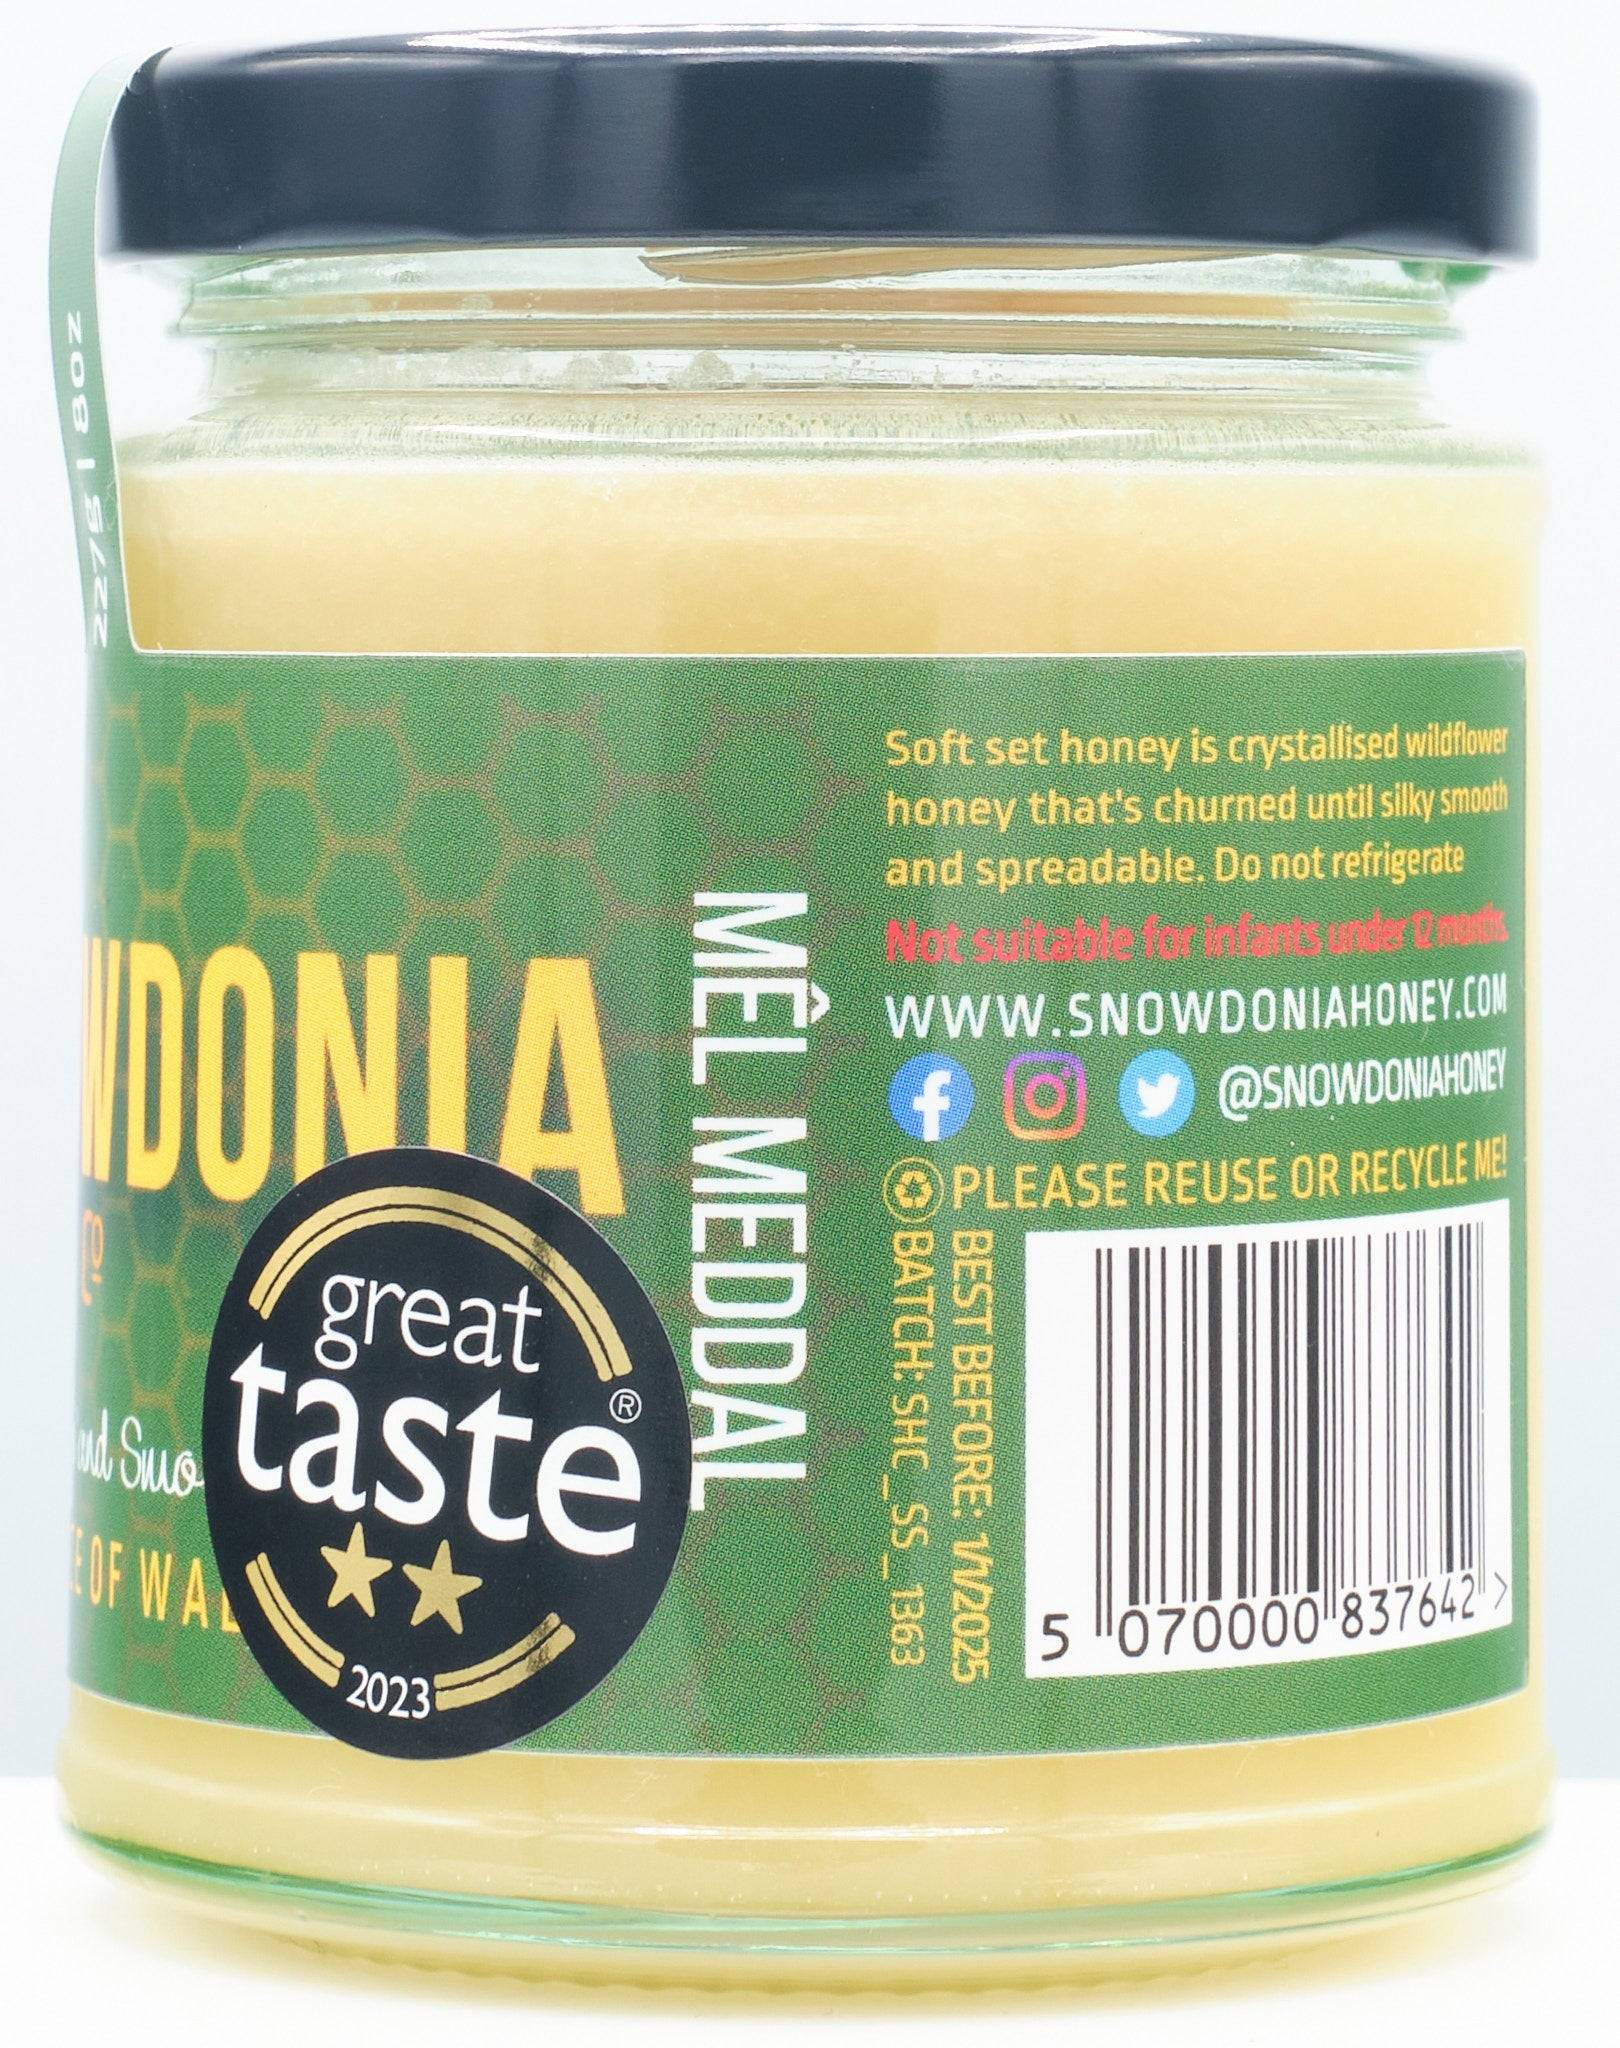 Snowdonia Wildflower Soft Set Welsh Honey 227g | Great Taste Award Winner - The Snowdonia Honey Co.